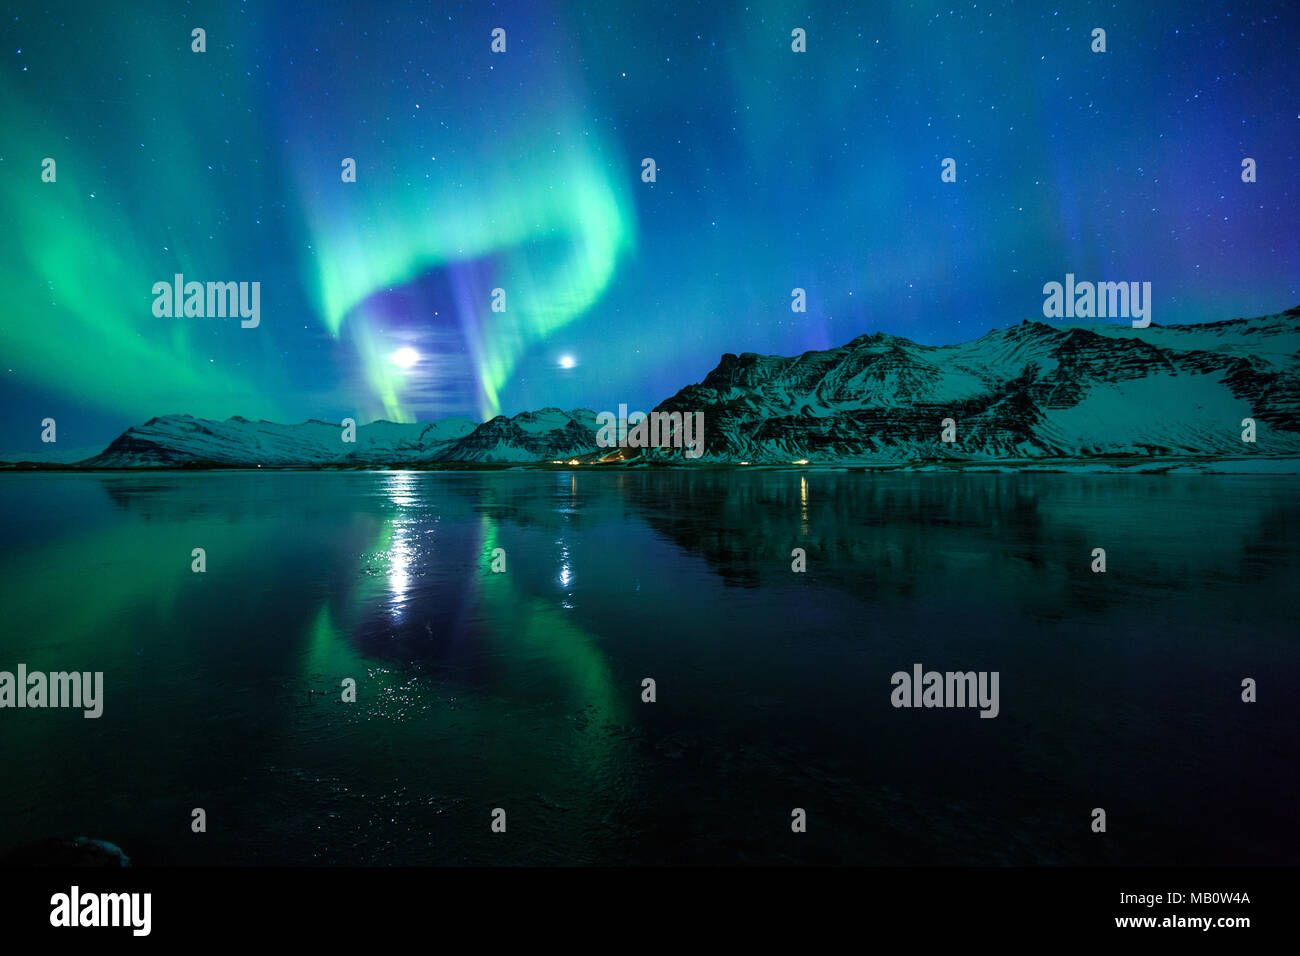 400+ Free Aurora Borealis & Northern Lights Images - Pixabay